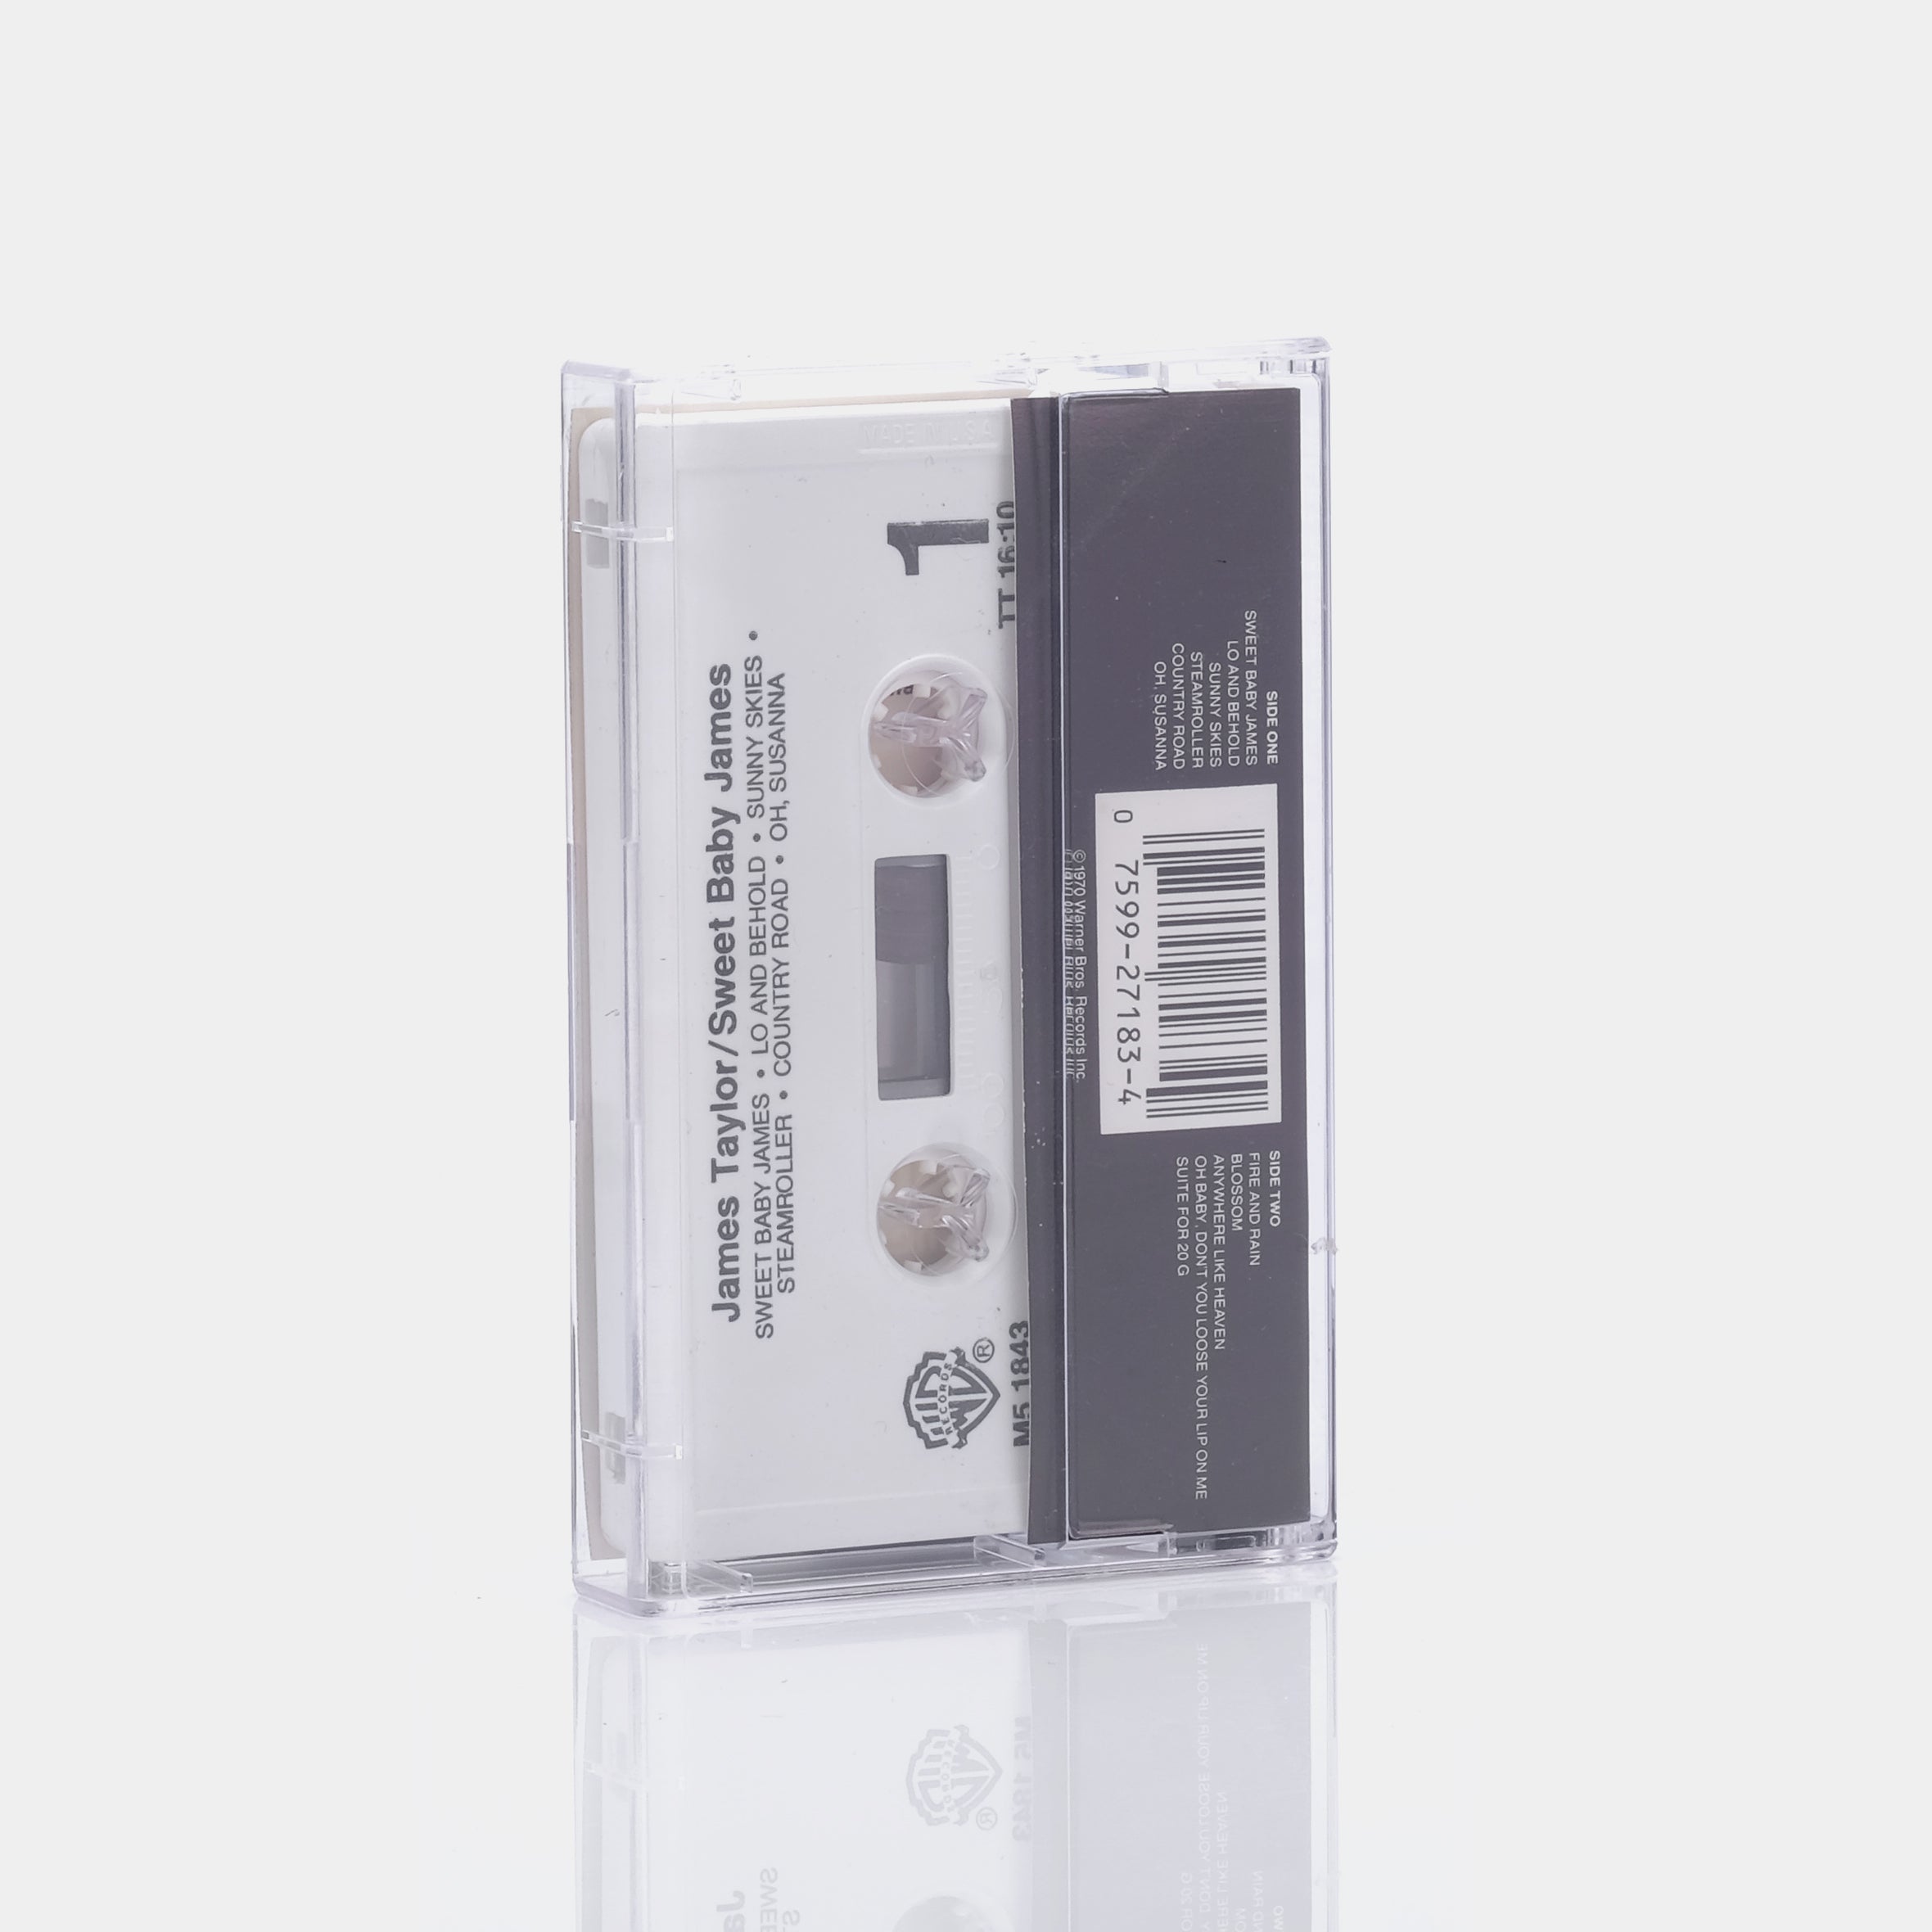 James Taylor - Sweet Baby James Cassette Tape